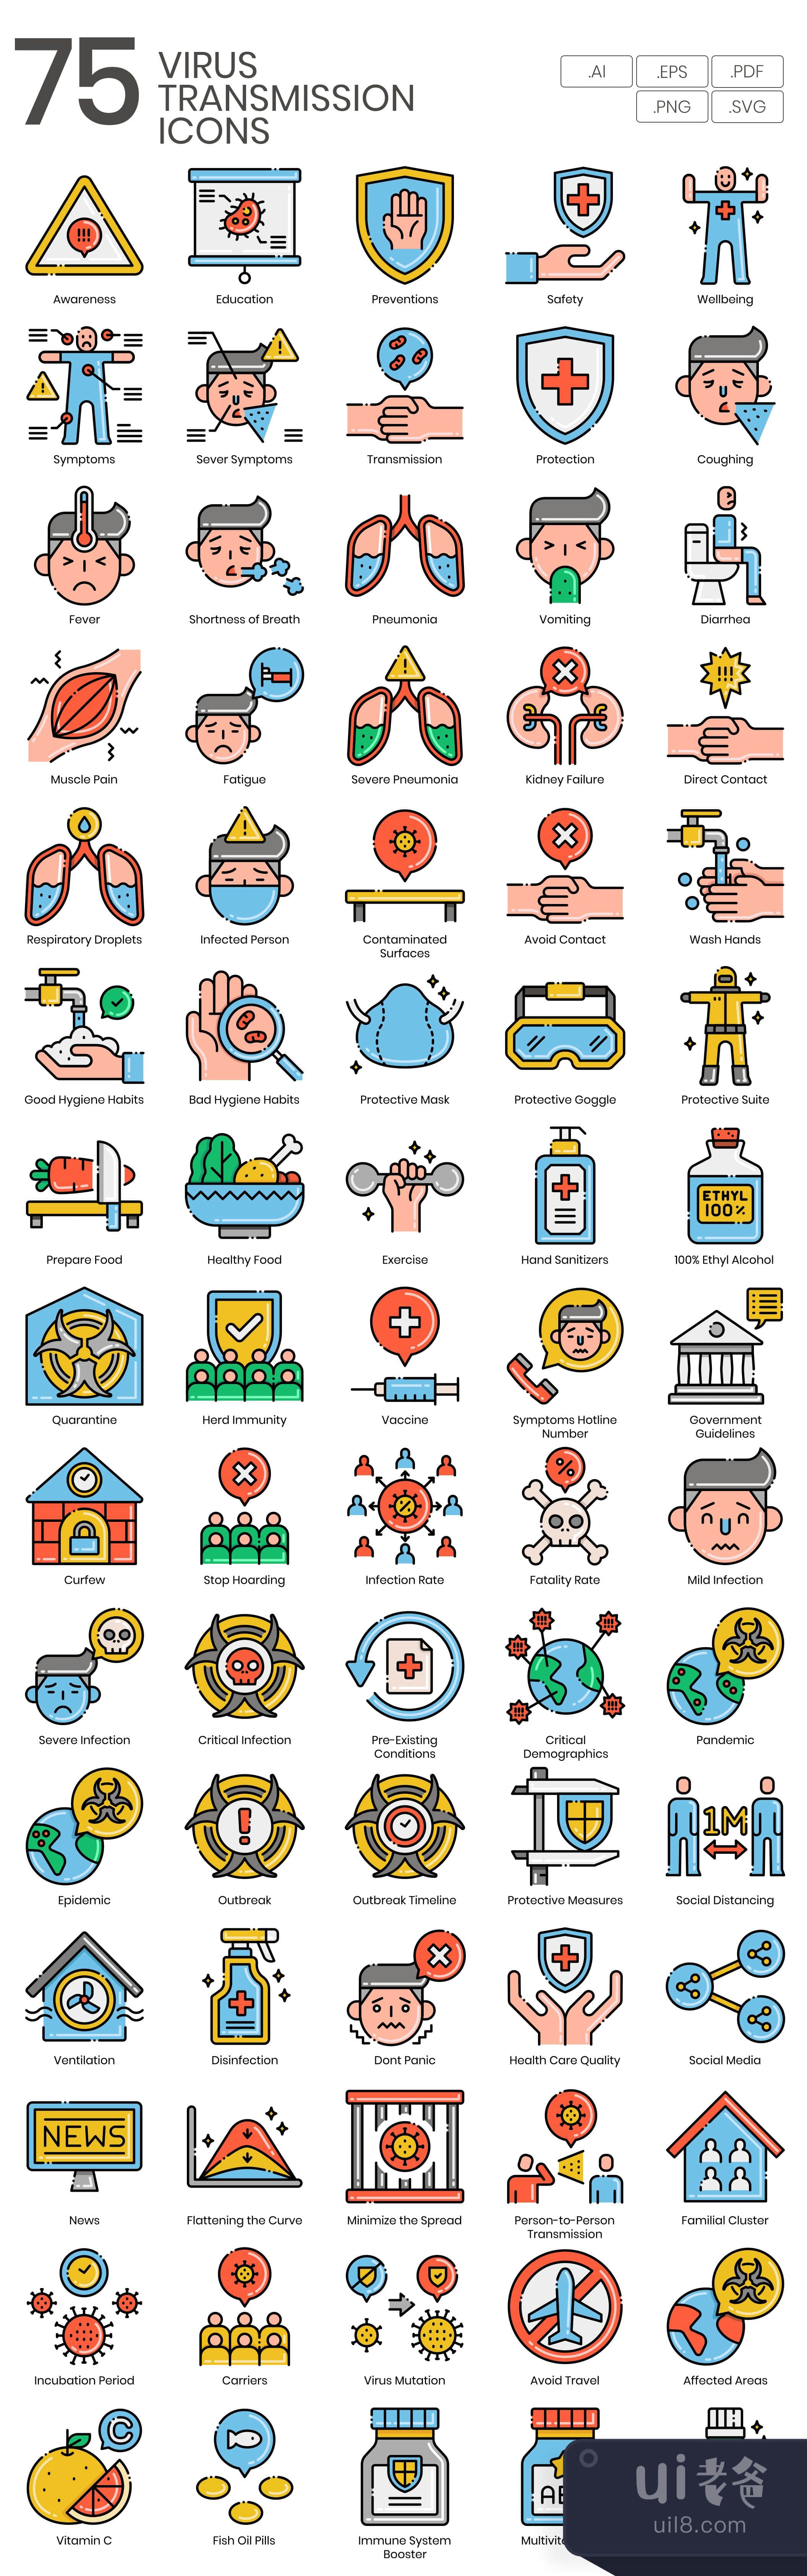 75个病毒传播图标美学系列 (75 Virus Transmission Icons Aesthet插图